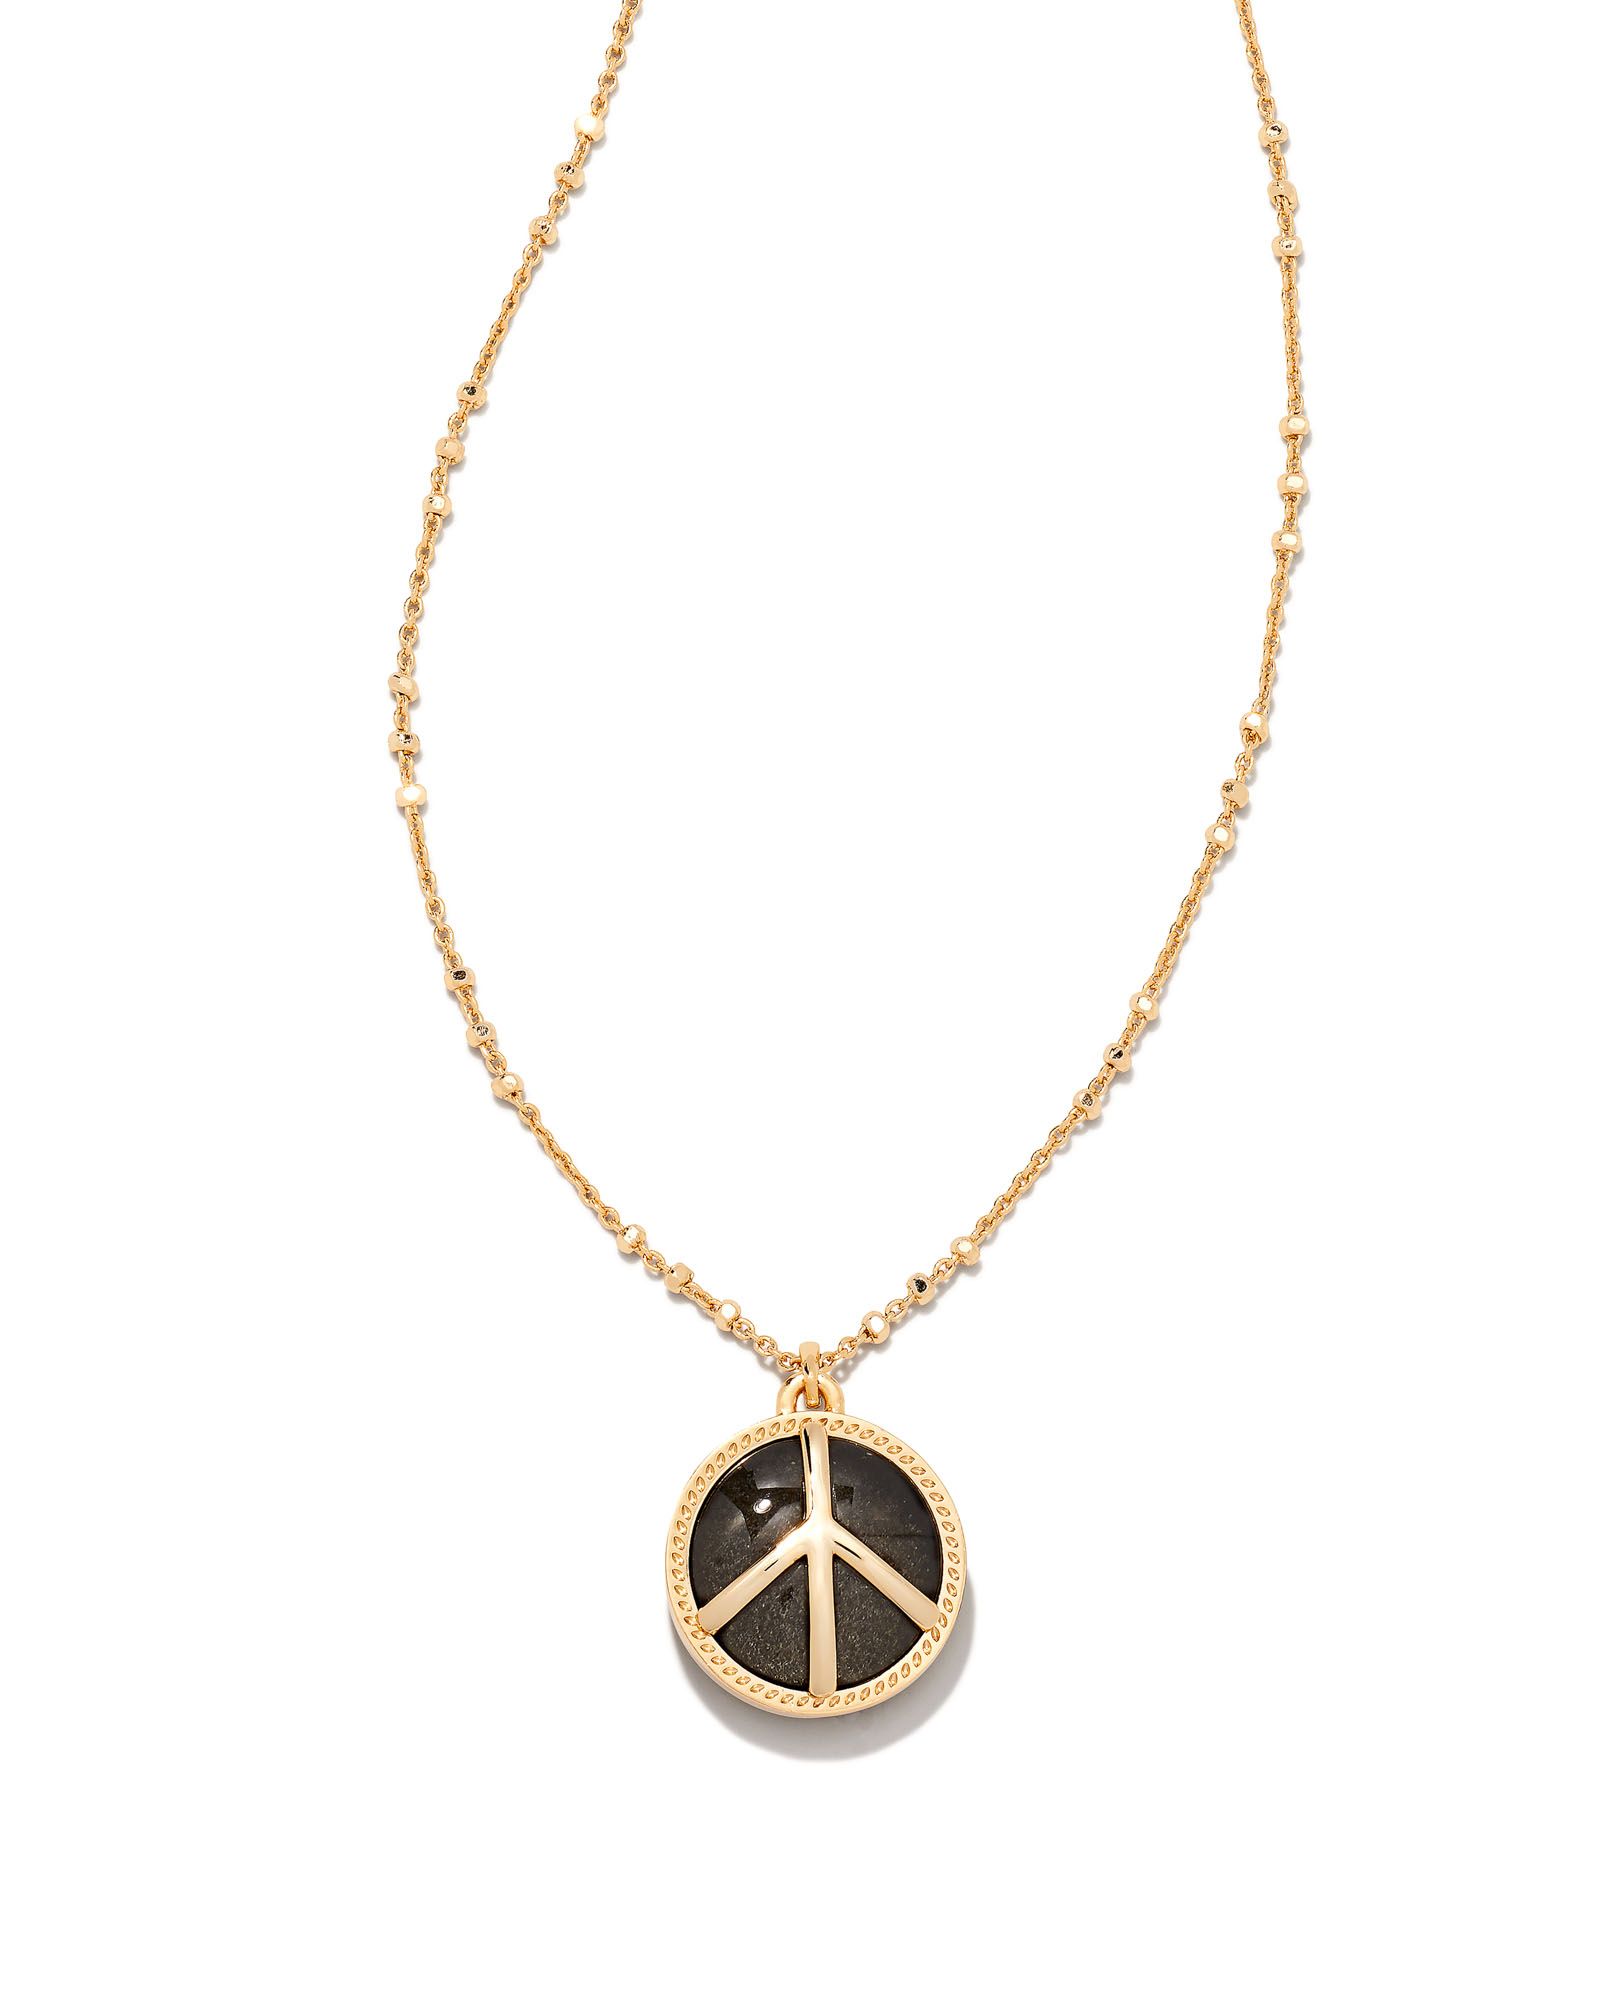 Peace Gold Pendant Necklace in Golden Obsidian | Kendra Scott